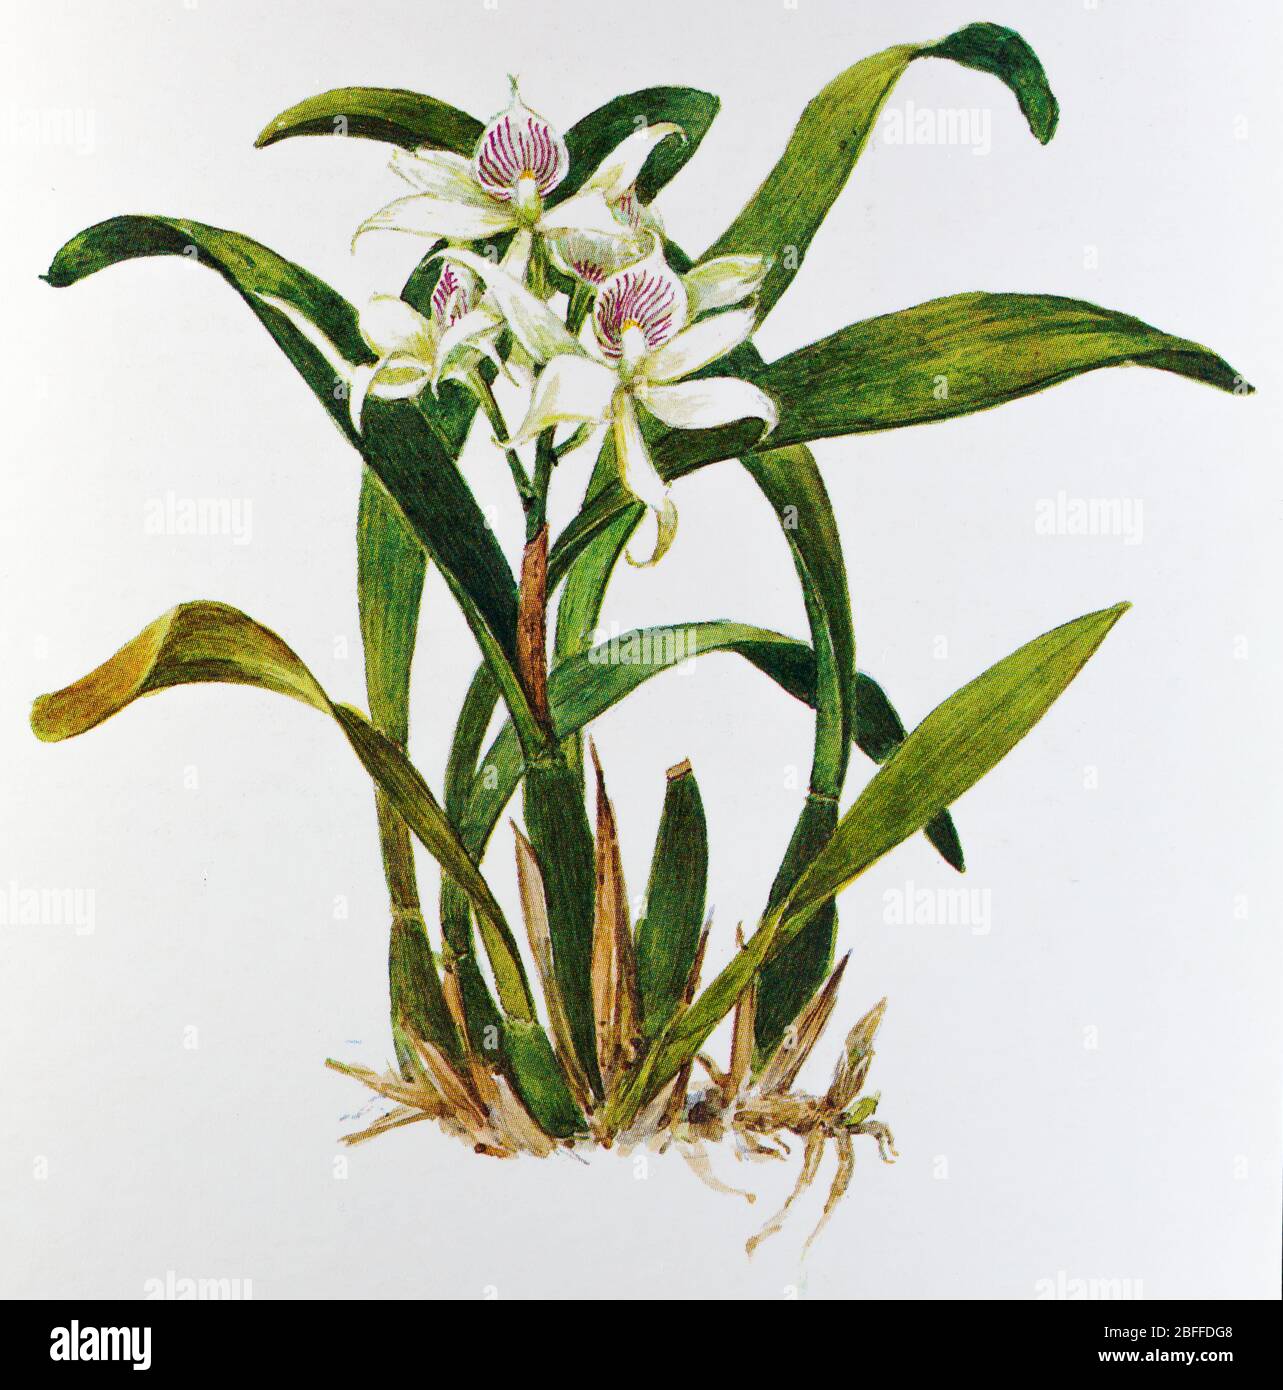 Epidendrum fragrans, Prosthechea fragrans, orchid flower, Soviet postcard illustration, 1988 Stock Photo